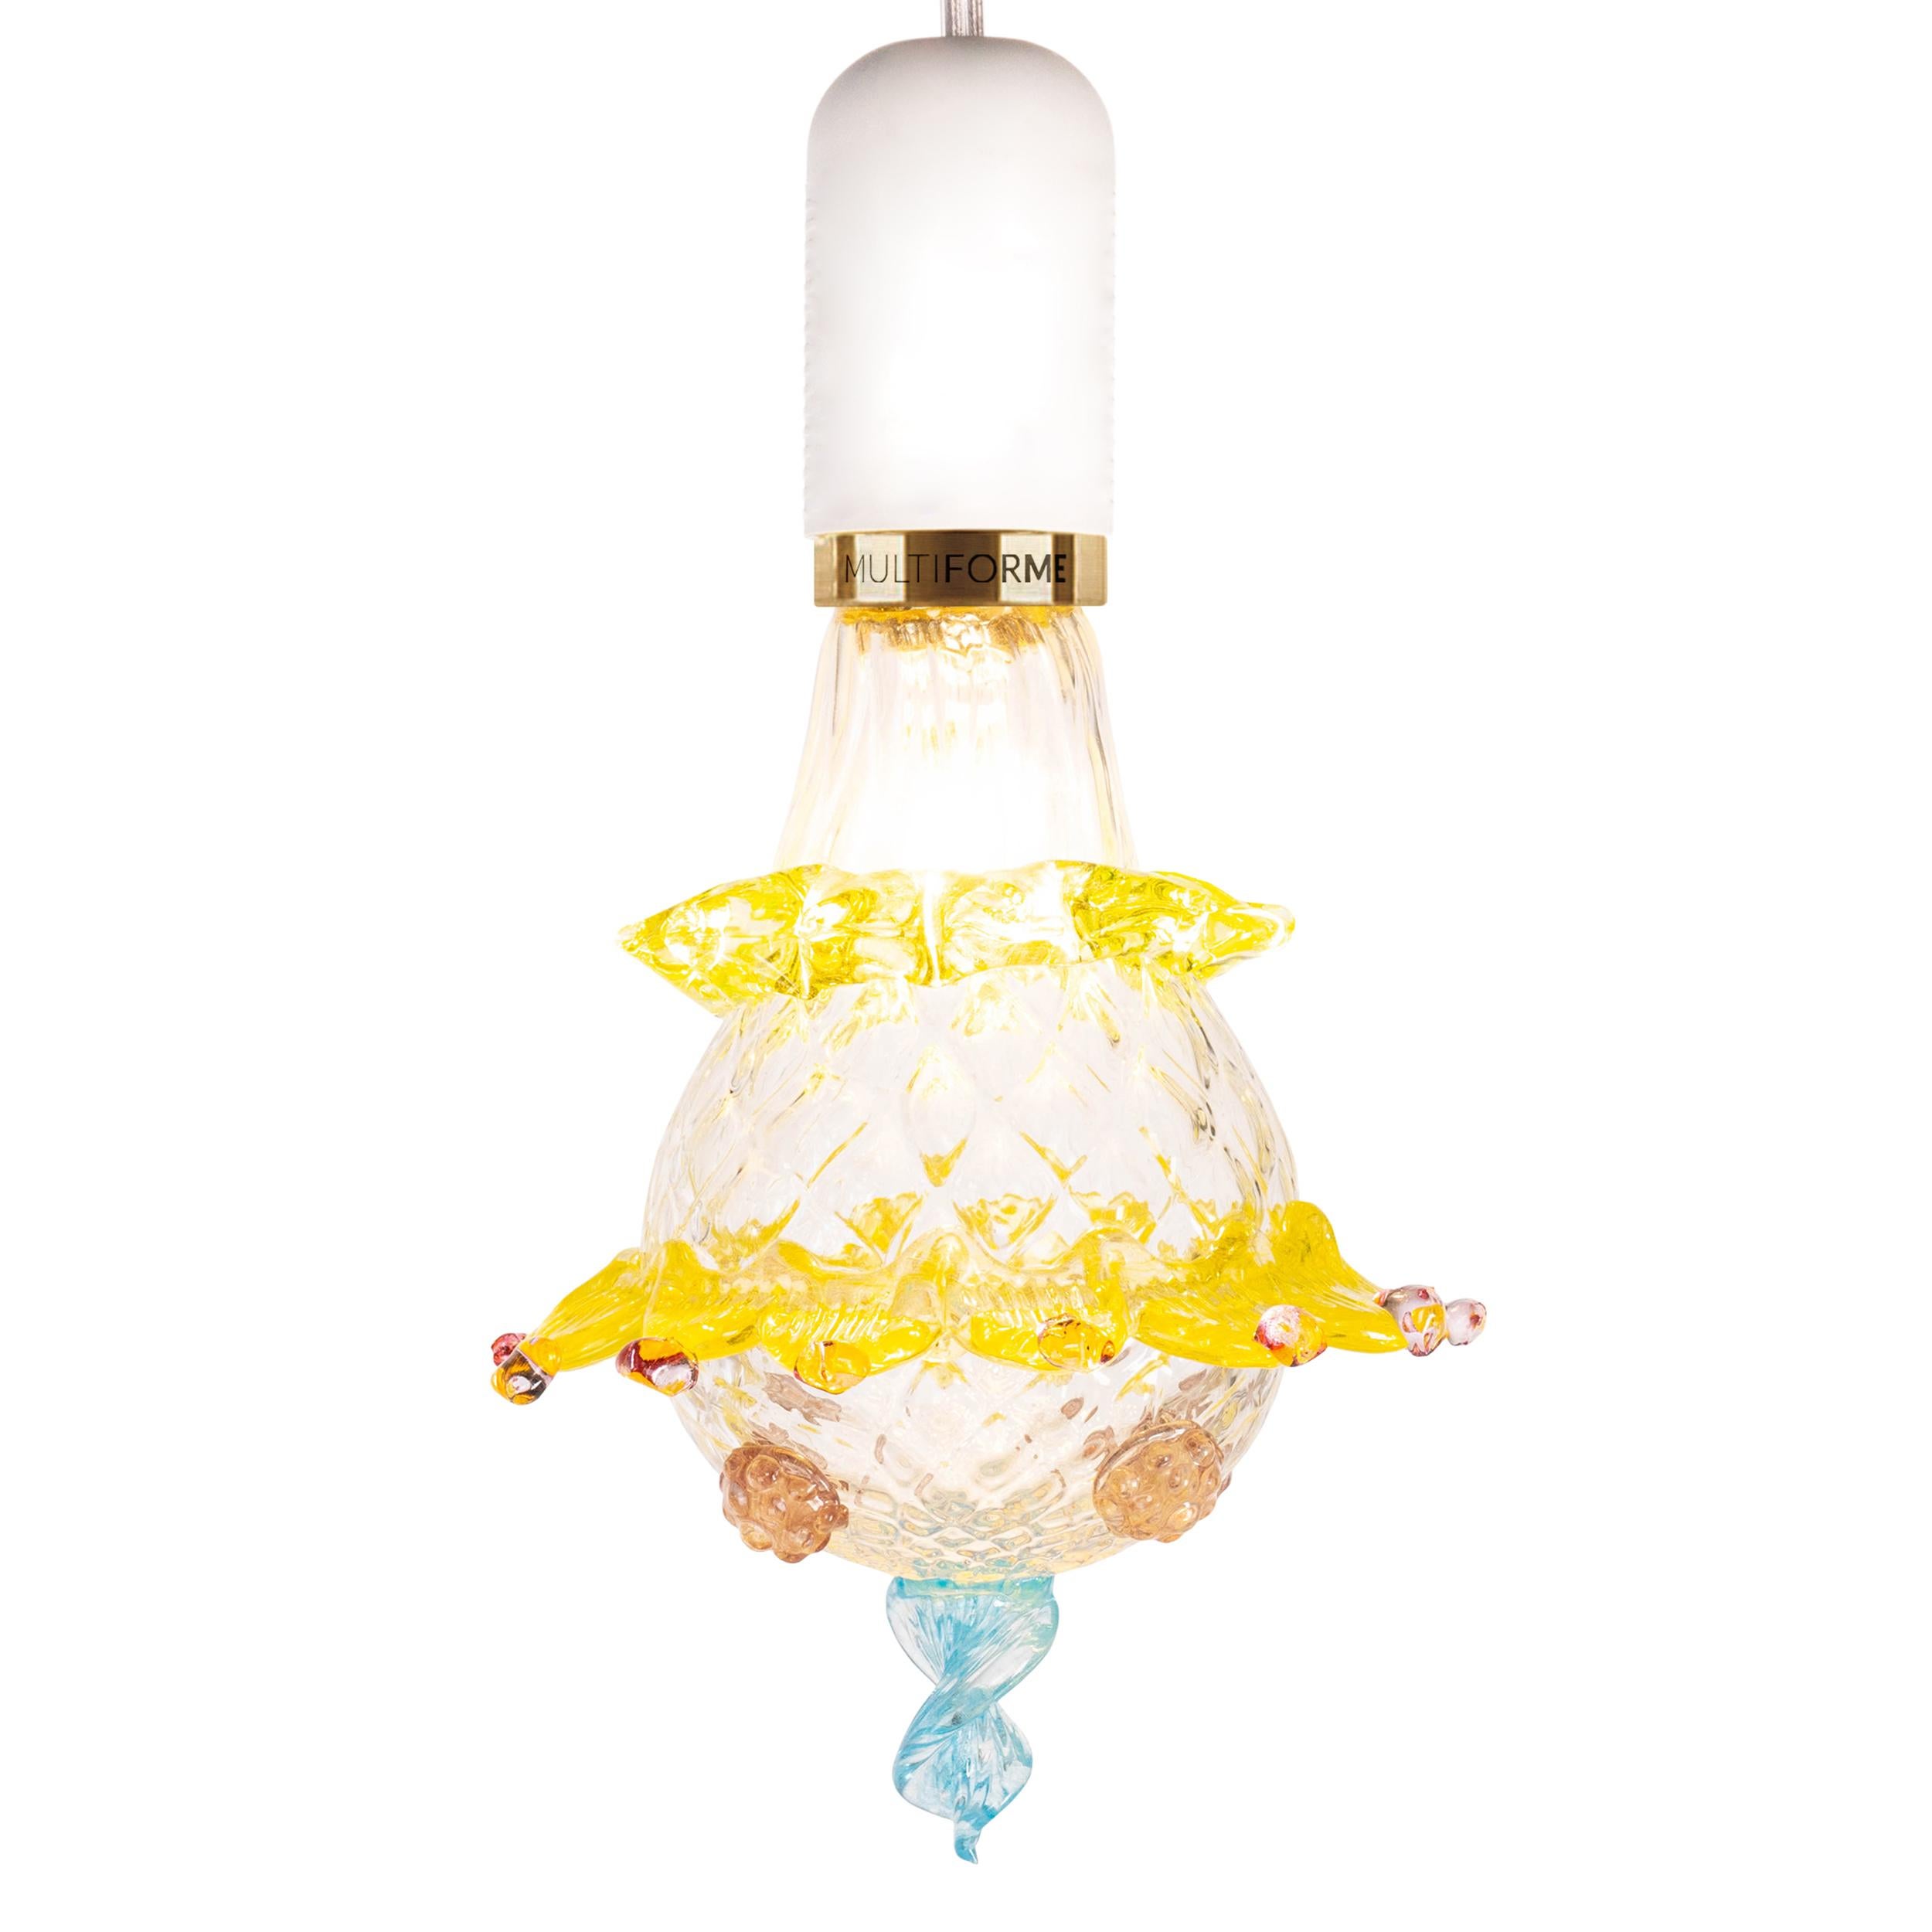 Artistic glass lightbulb chandelier Murano Bulb Marcantonio X Multiforme #06 In New Condition For Sale In Trebaseleghe, IT